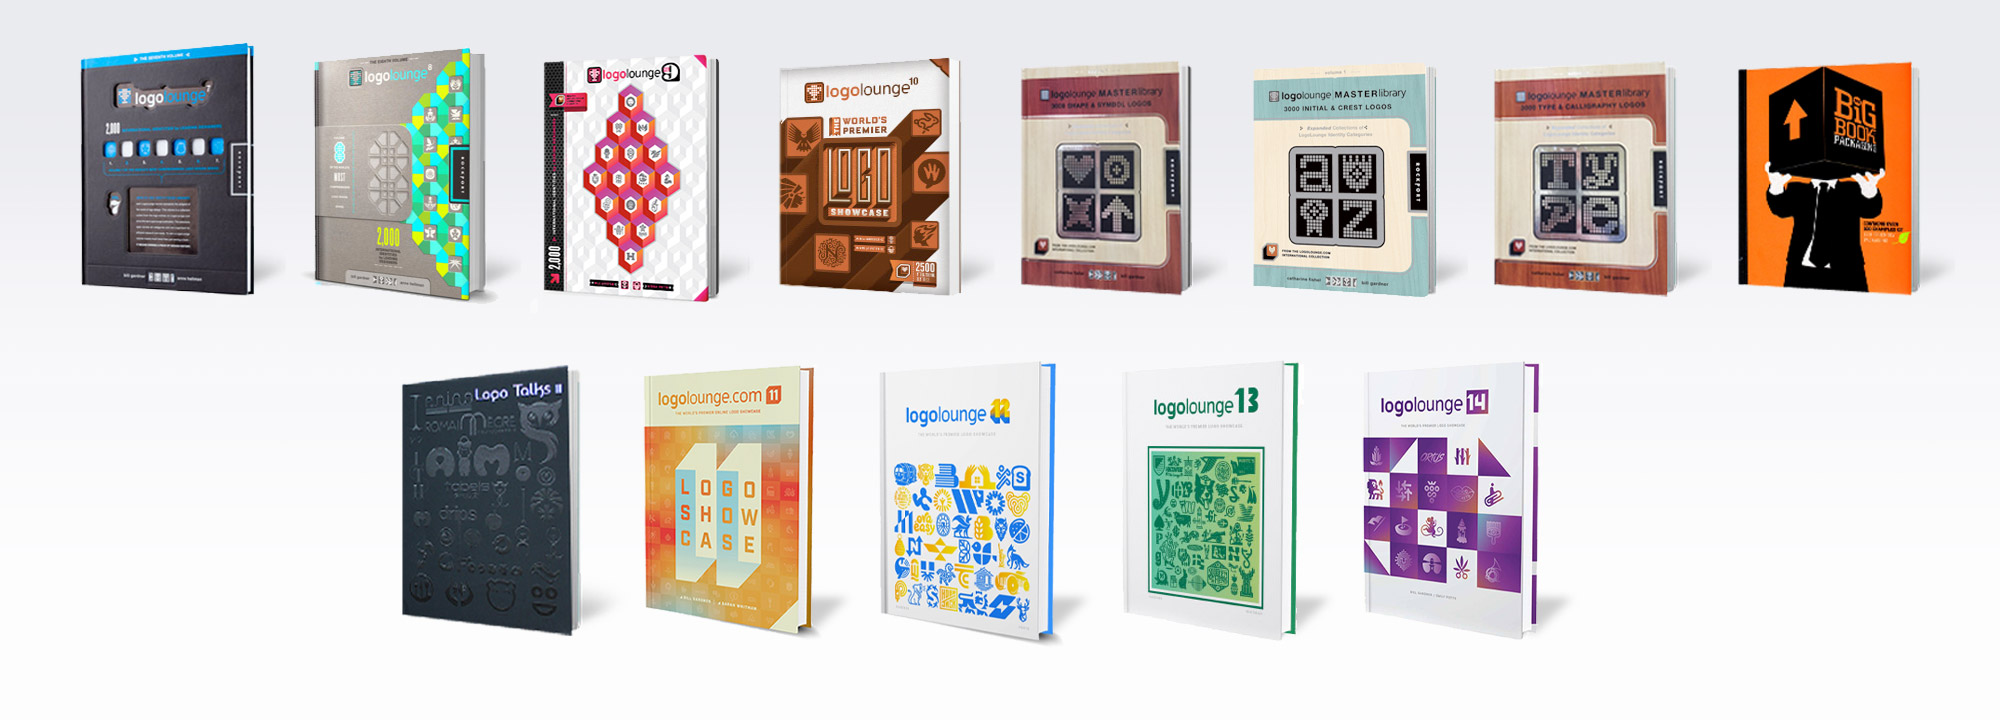 VL design books & publications awards